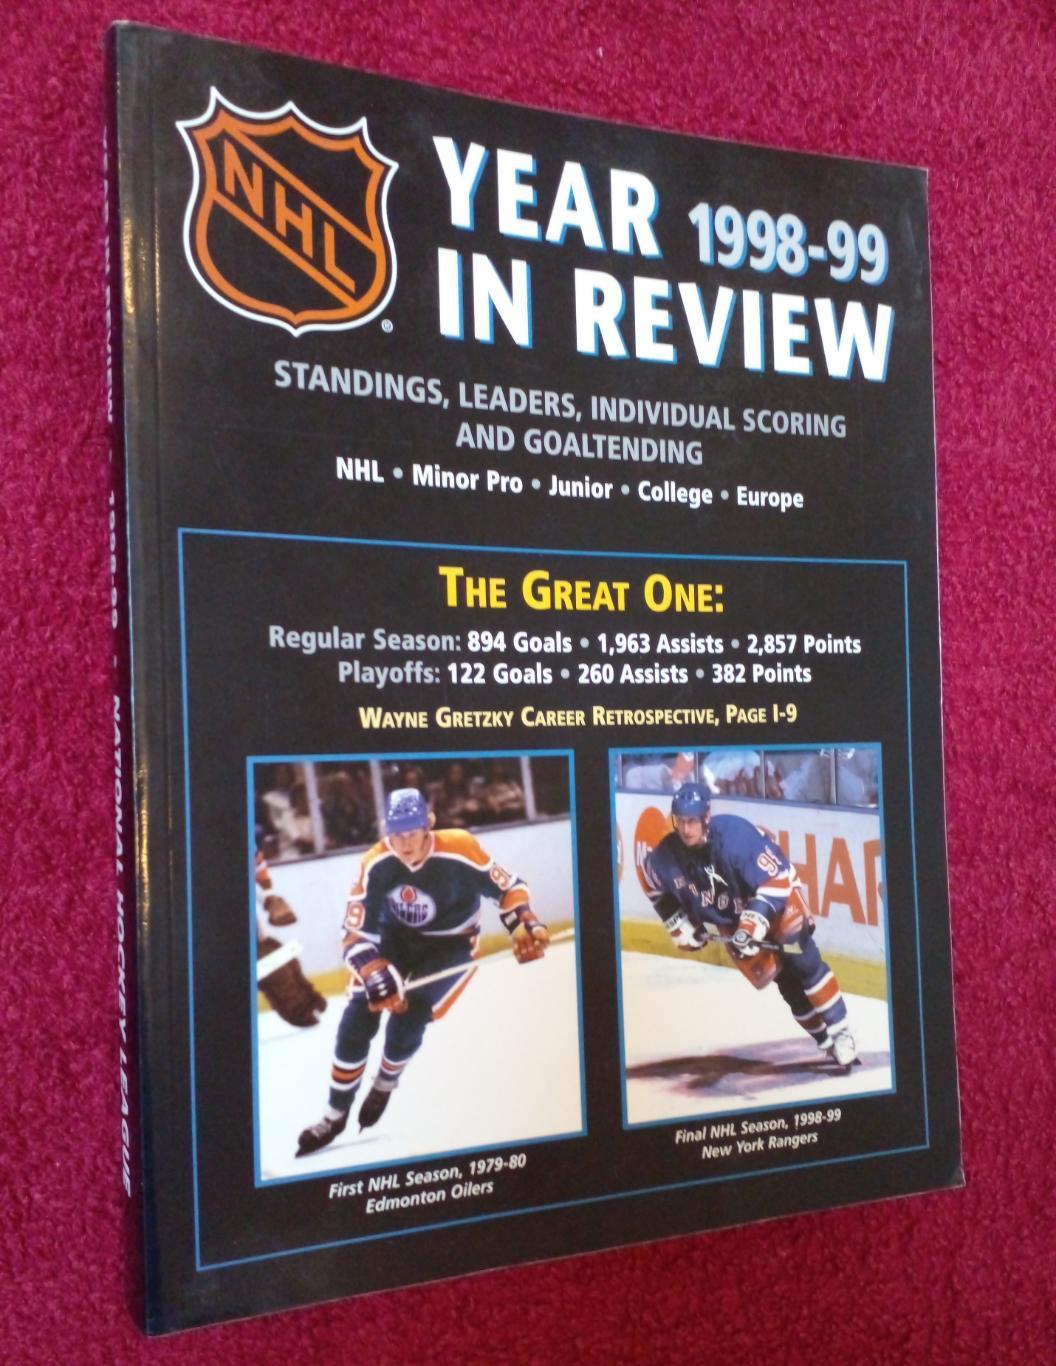 Хоккей. Справочник YEAR 1998-99 IN REVIEW. НХЛ, Юниоры, ЕВРОПА итд.